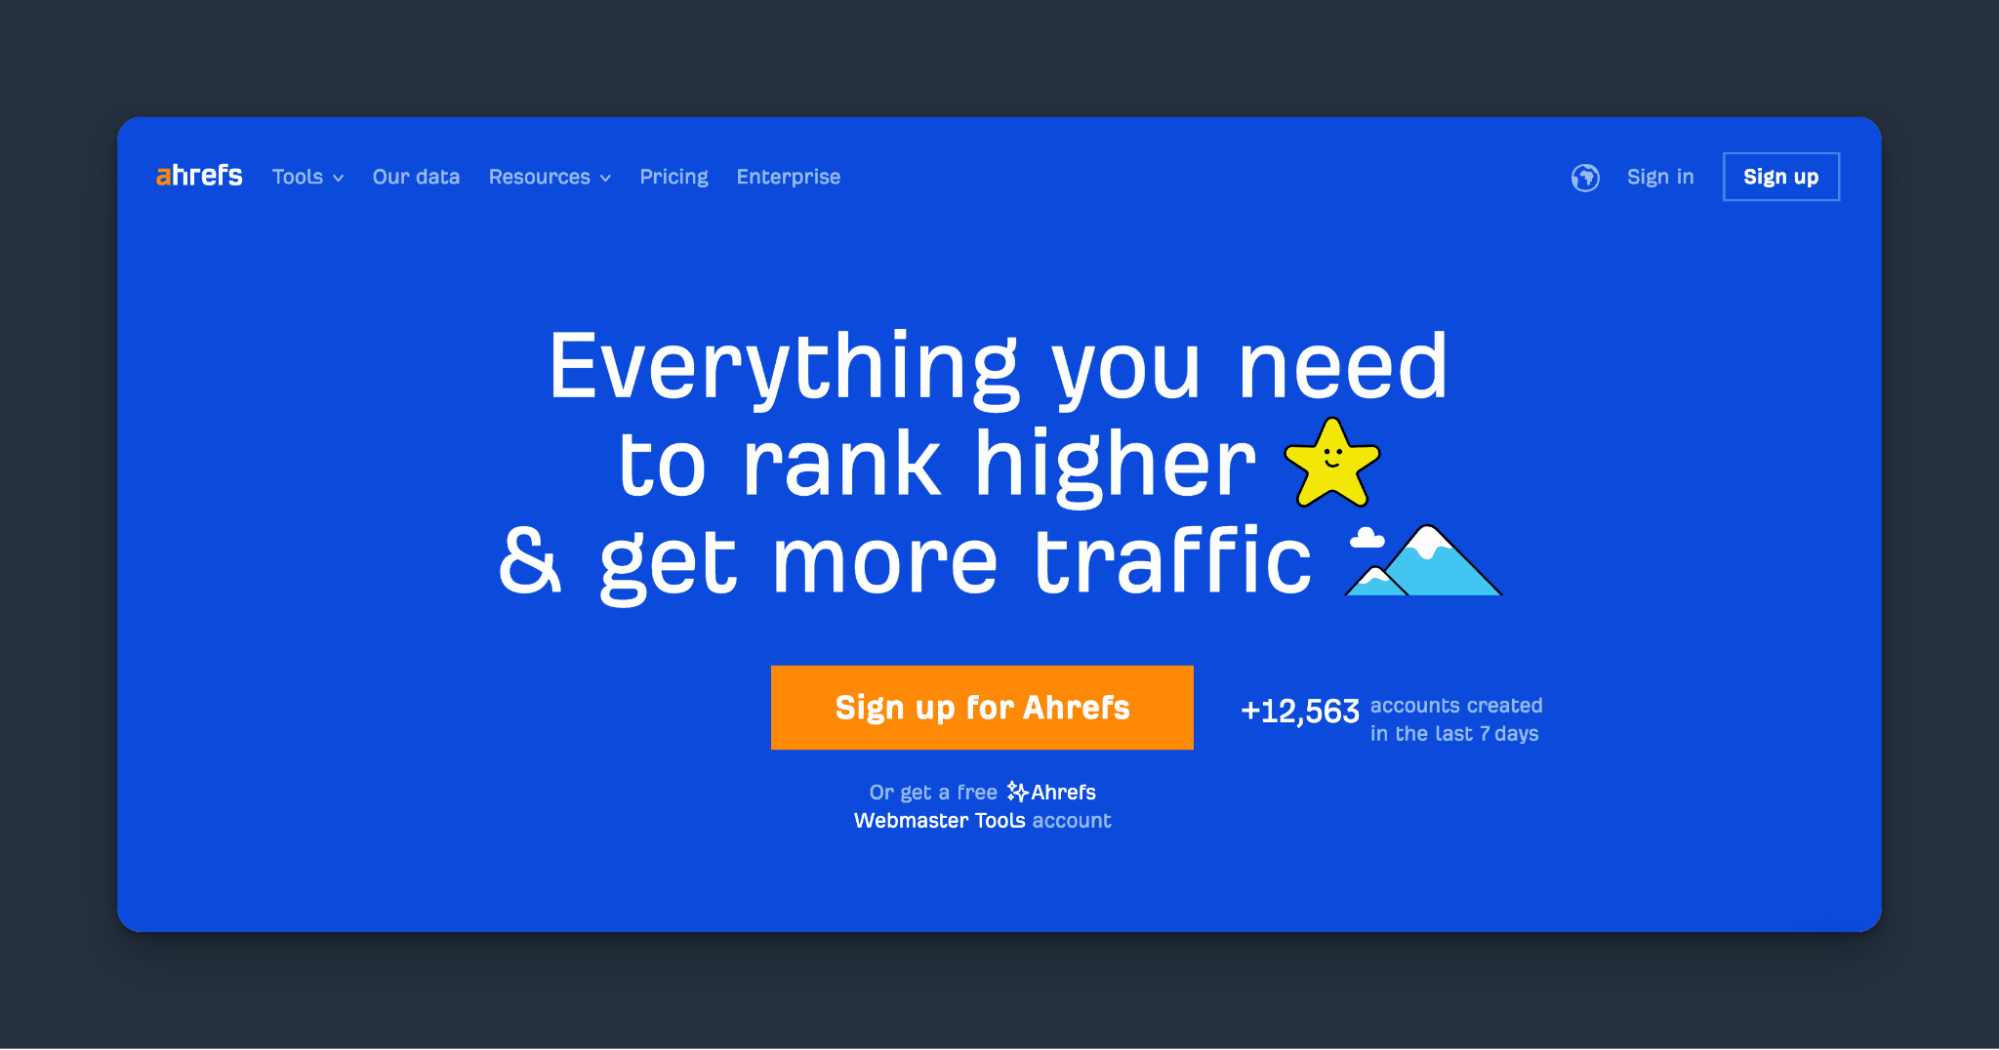 ahrefs homepage ad